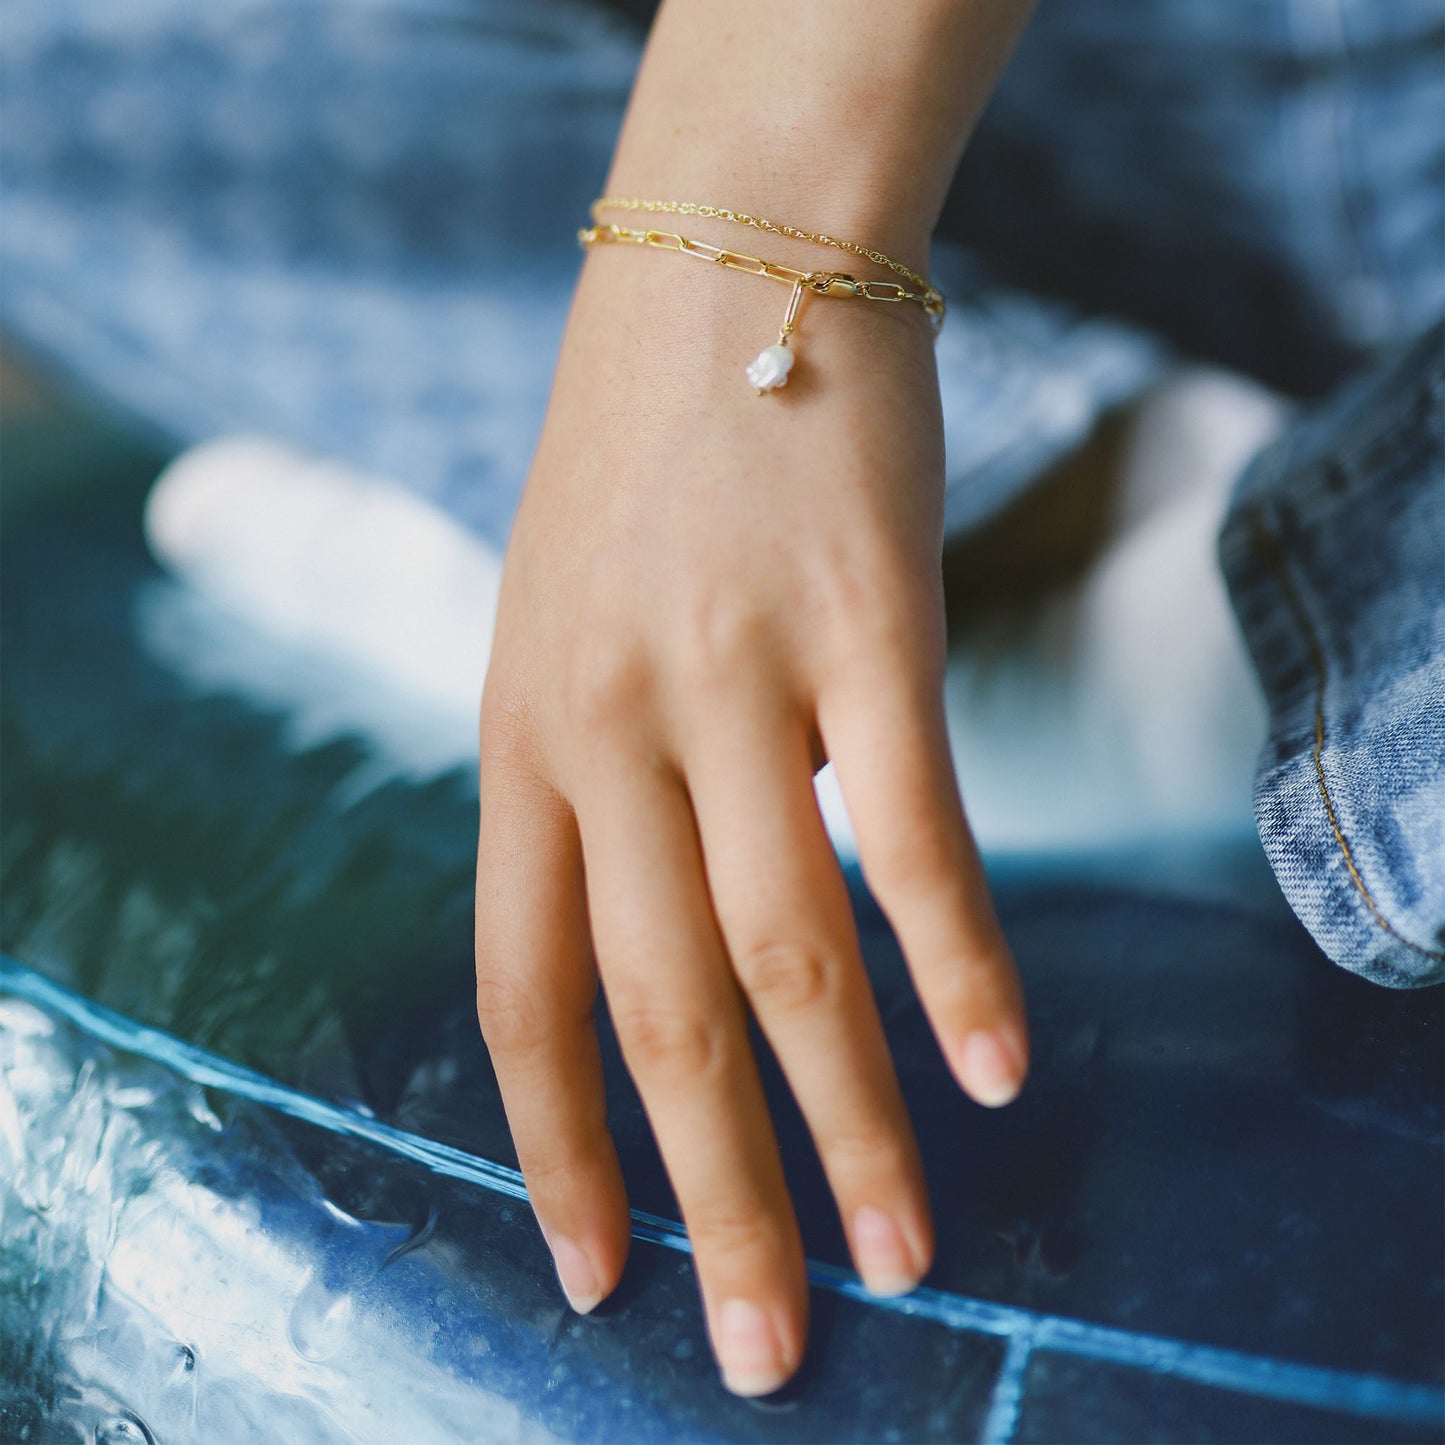 Amazon.com: Jewelry Affairs 14k Yellow Gold Twisted Women's Bangle Bracelet,  8